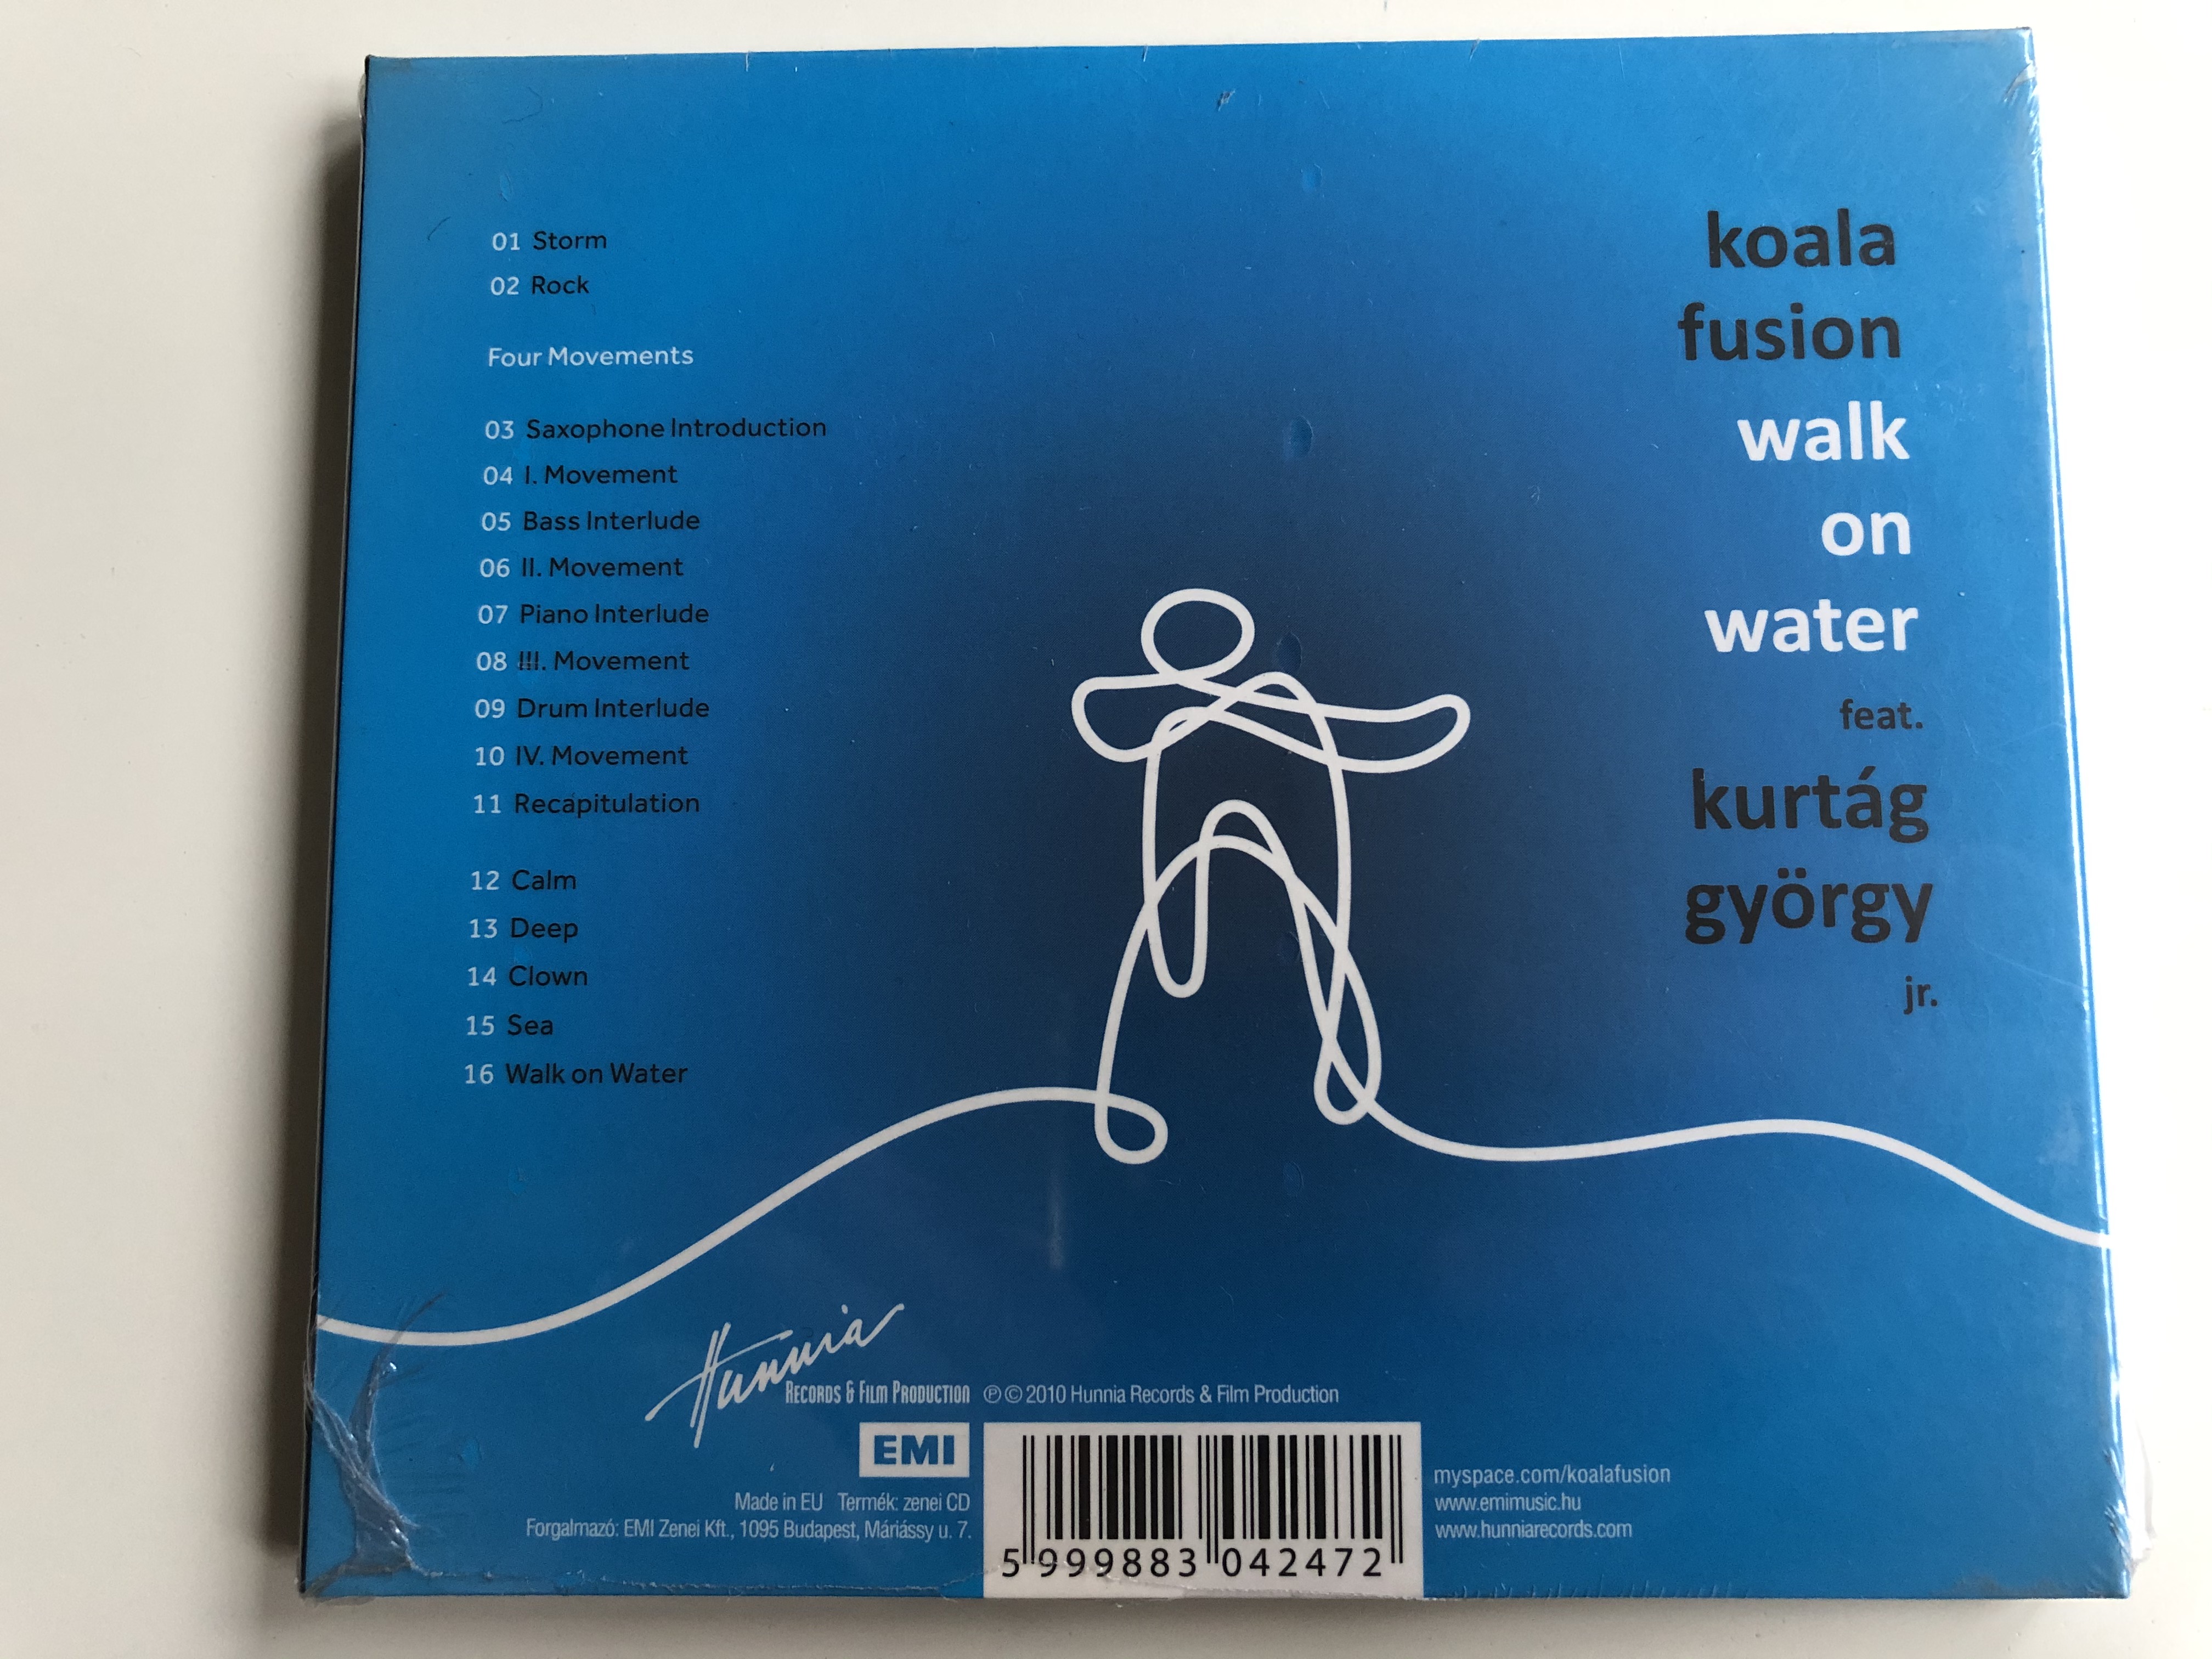 koala-fusion-walk-on-water-feat.-kurtag-gyorgy-jr.-hunnia-records-film-production-audio-cd-2010-hrcd-1003-2-.jpg